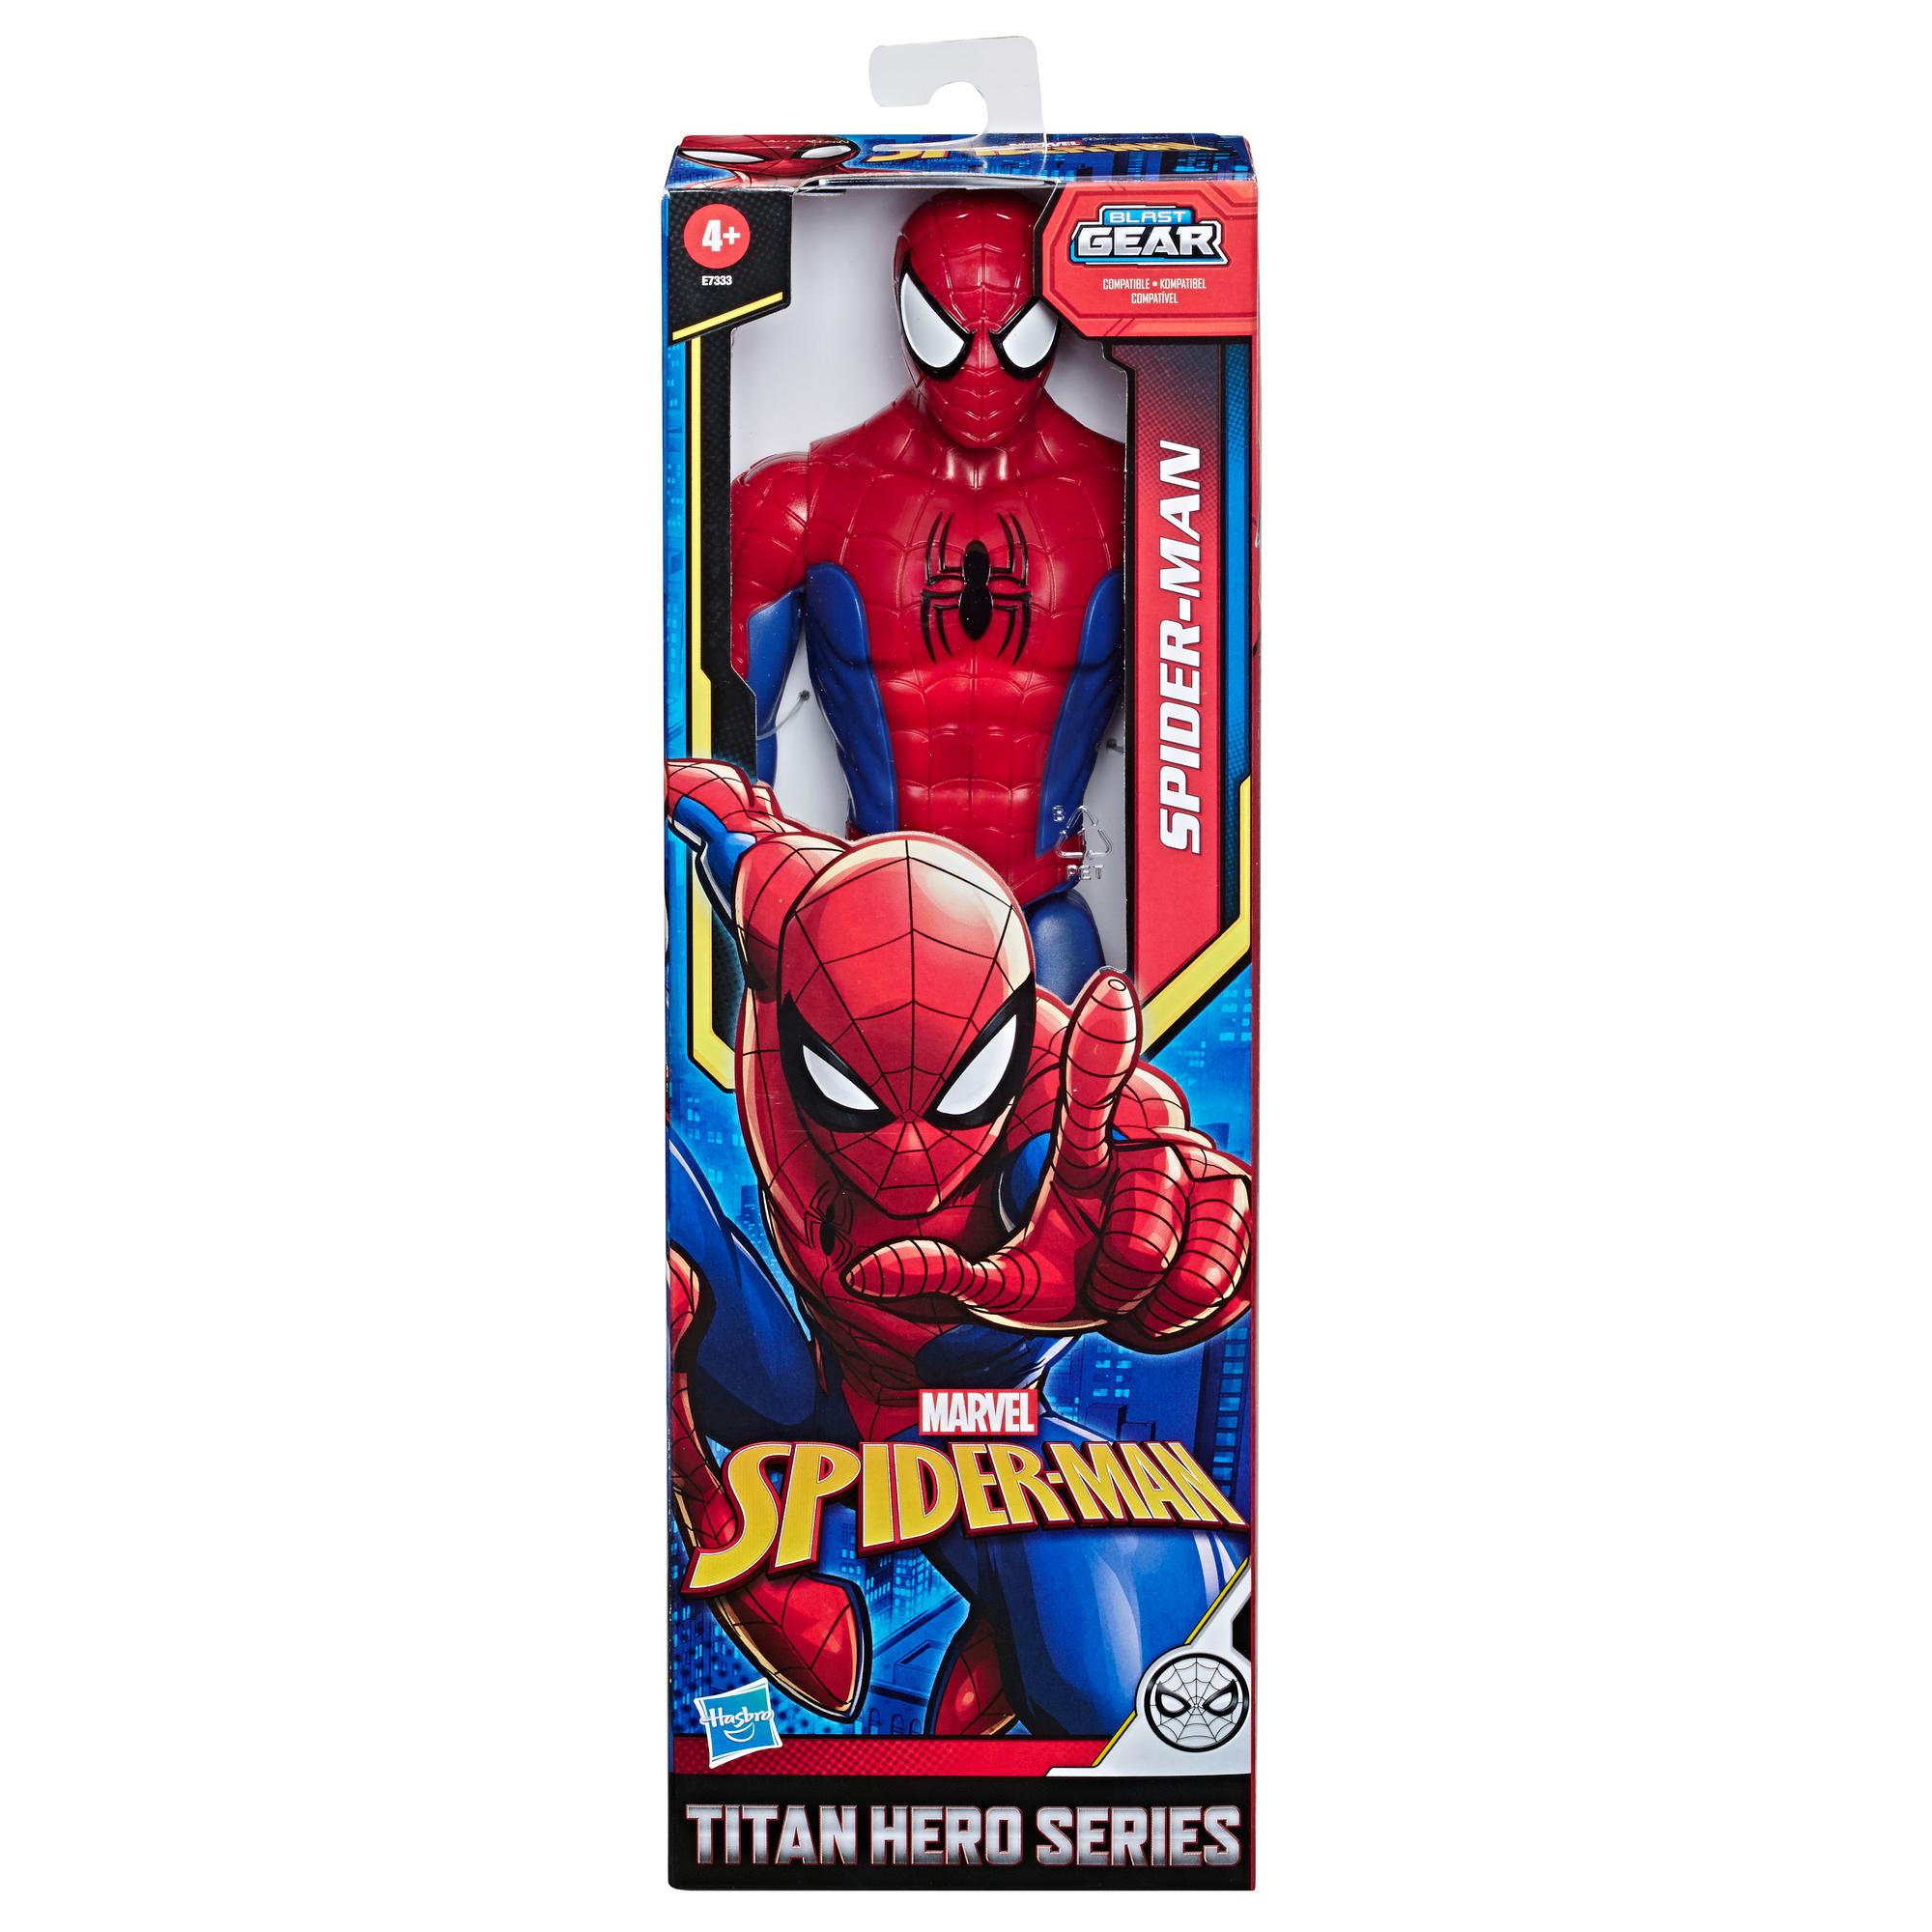 12" Titan Hero Series Marvel the Avengers Black Spiderman Figures PVC Toys 